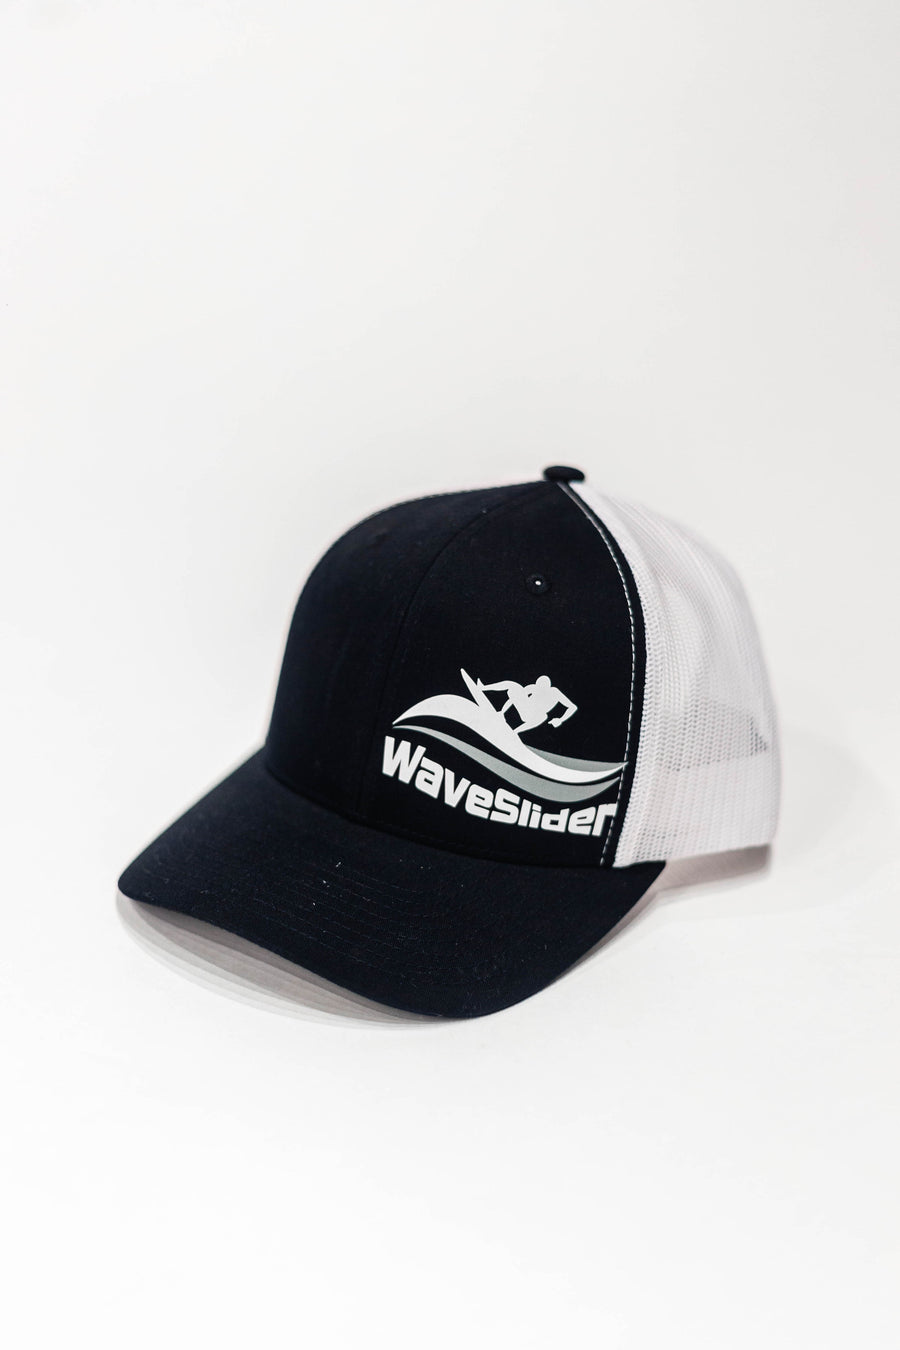 WaveSlider B&W Snapback Mesh Hat